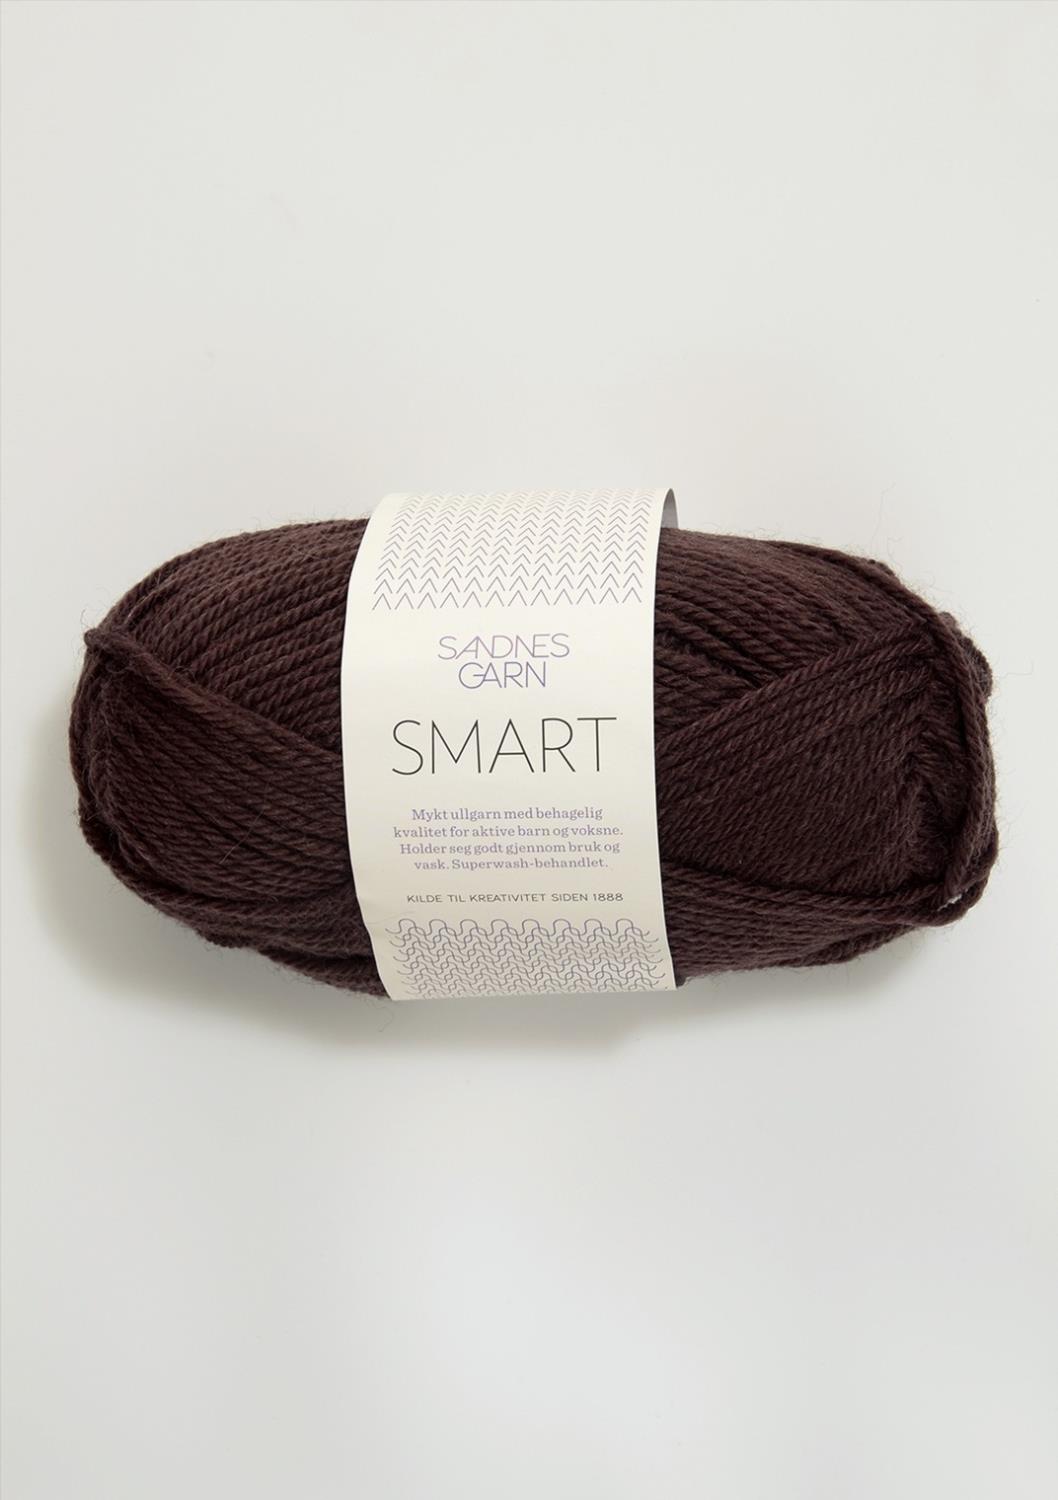 Smart Sandnes 3082 - Brun